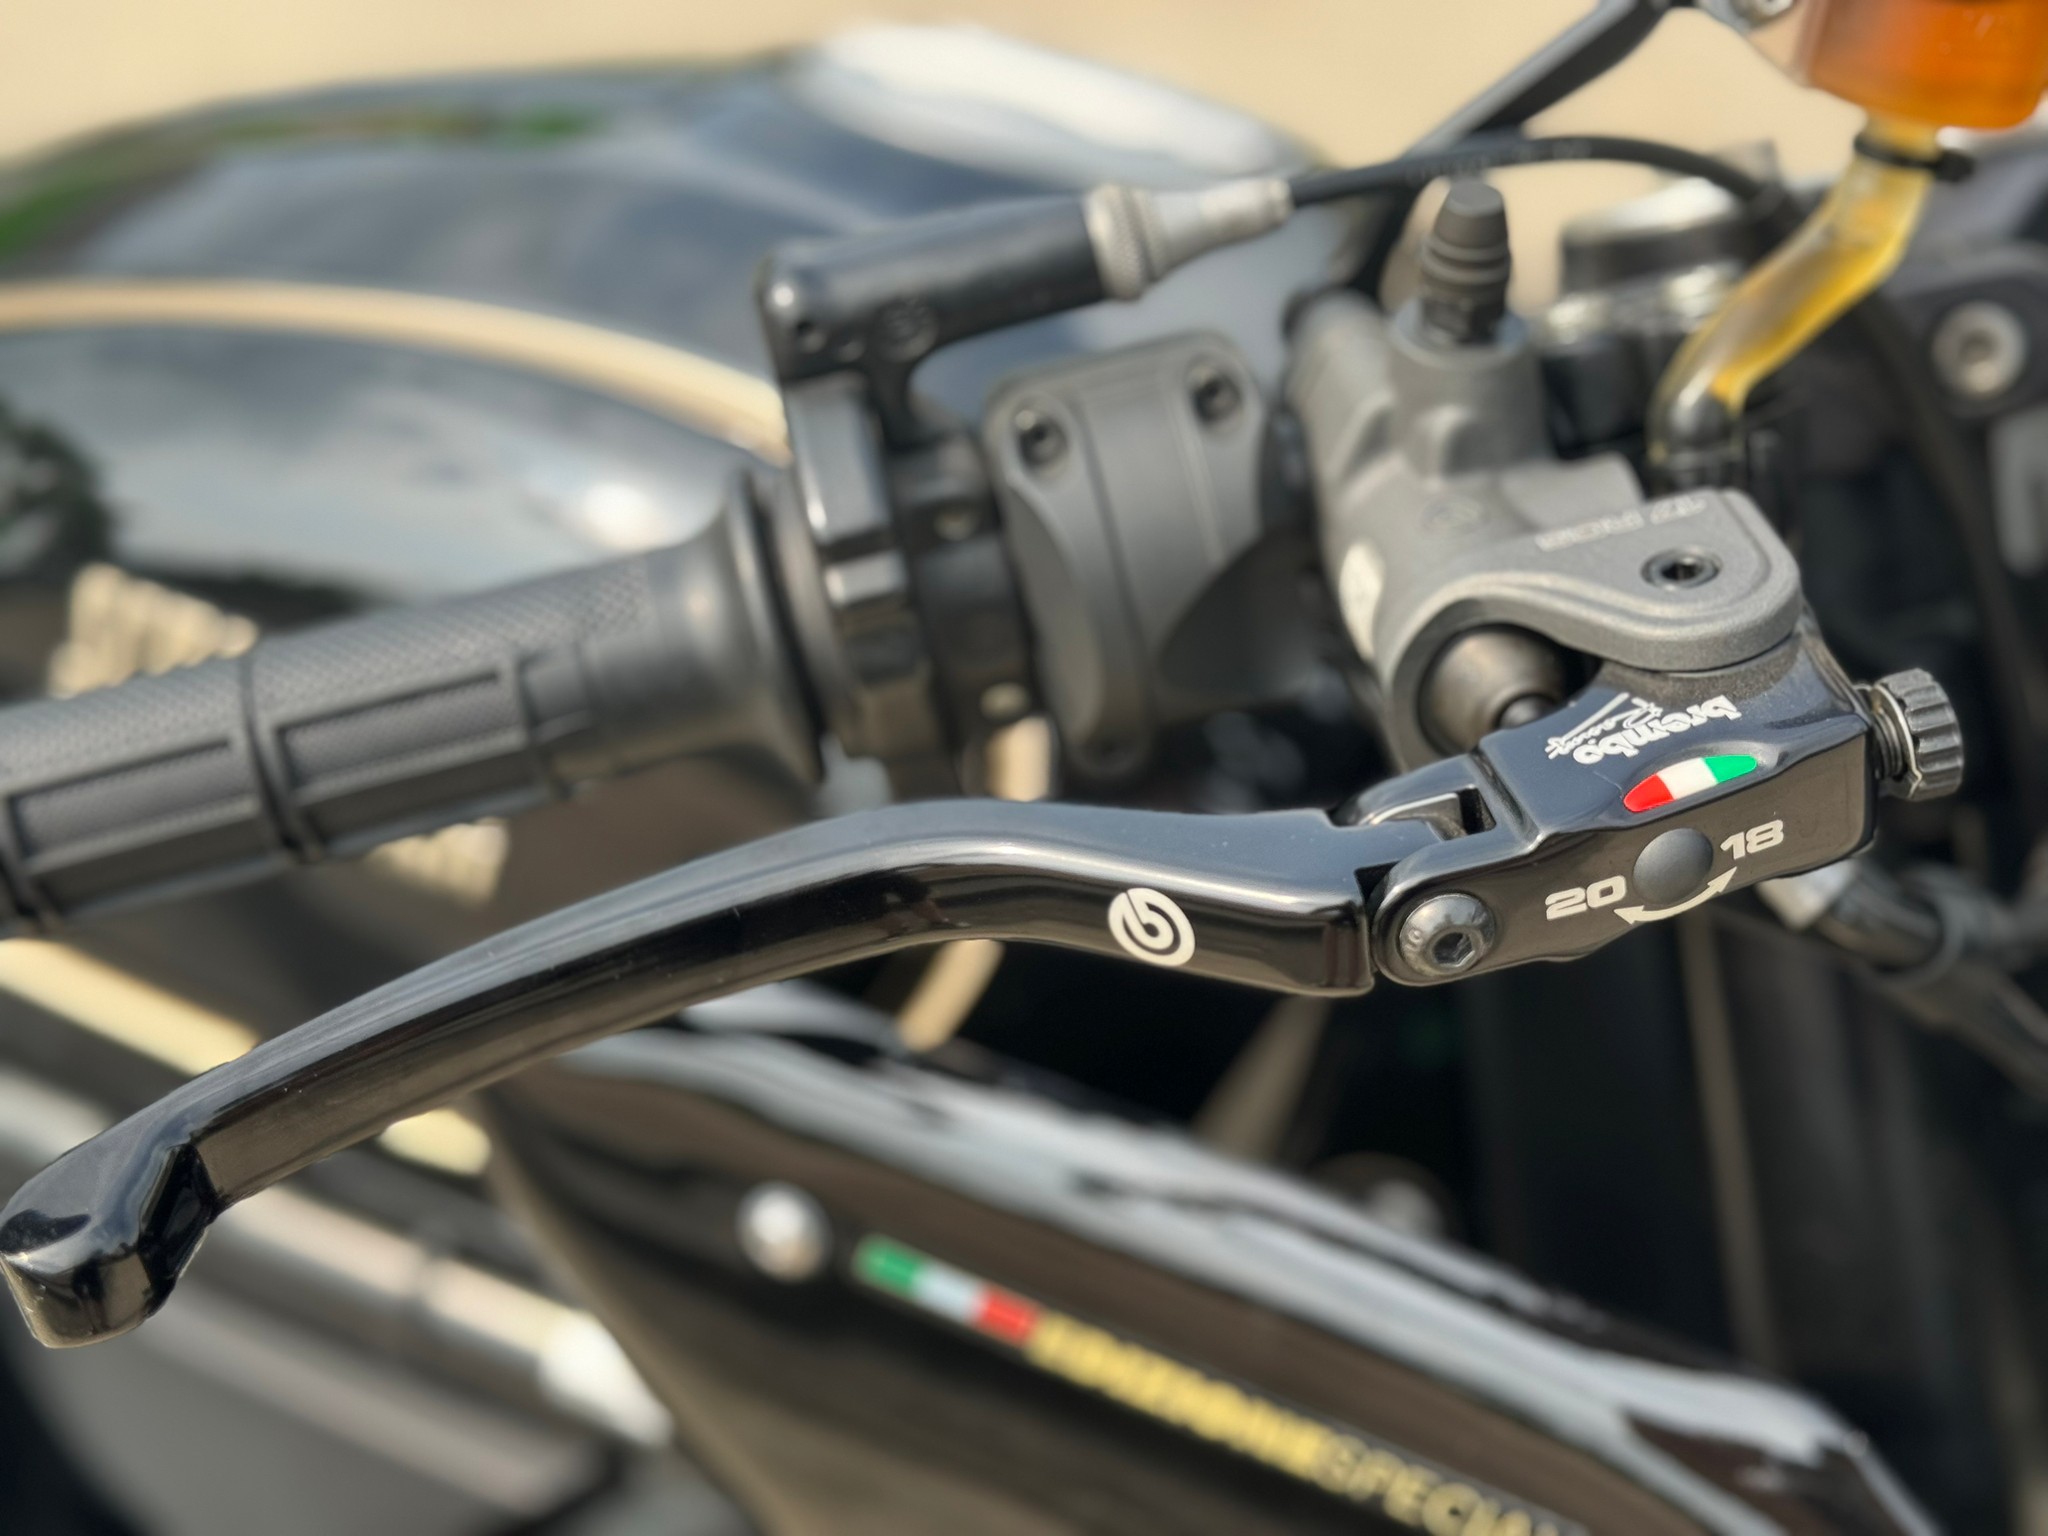 DUCATI SCRAMBLER CAFE RACER - 中古/二手車出售中 Ducati Scrambler Cafe Racer ABS | 艾瑞克重機